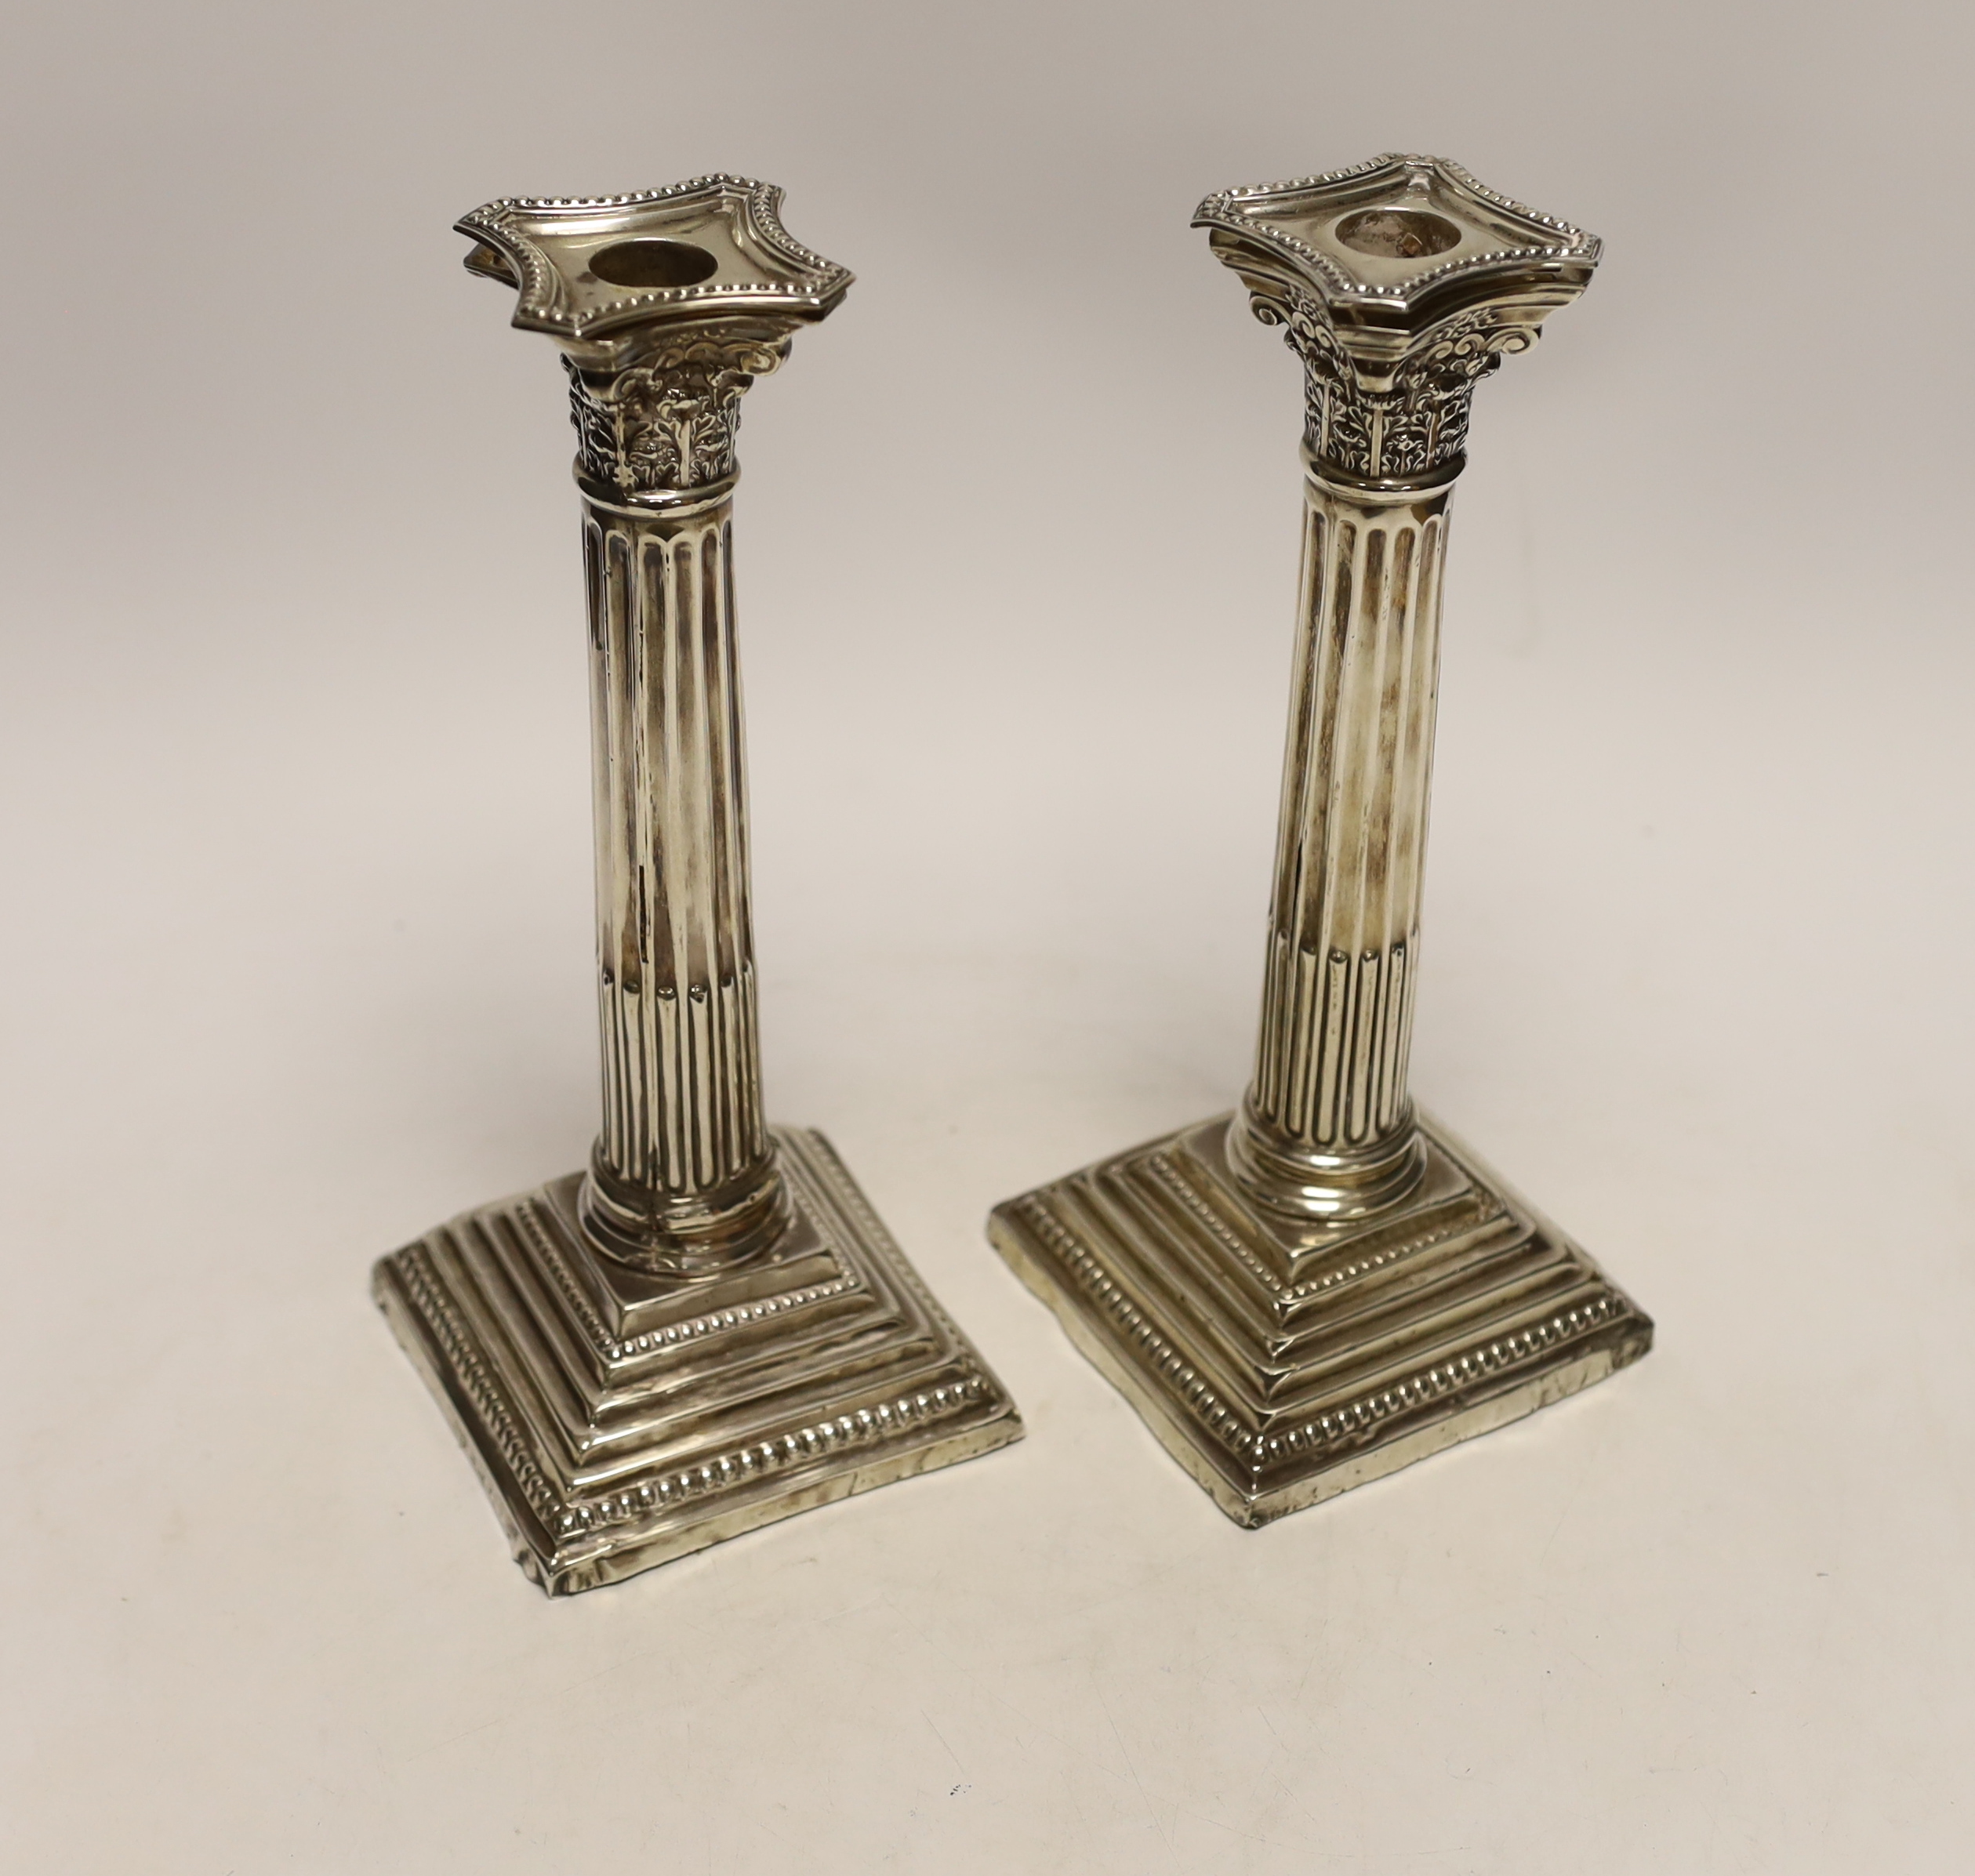 A pair of Edwardian silver Corinthian column candlesticks, by Jones & Crompton, Birmingham, 1903, height 24cm, weighted, (a.f.).